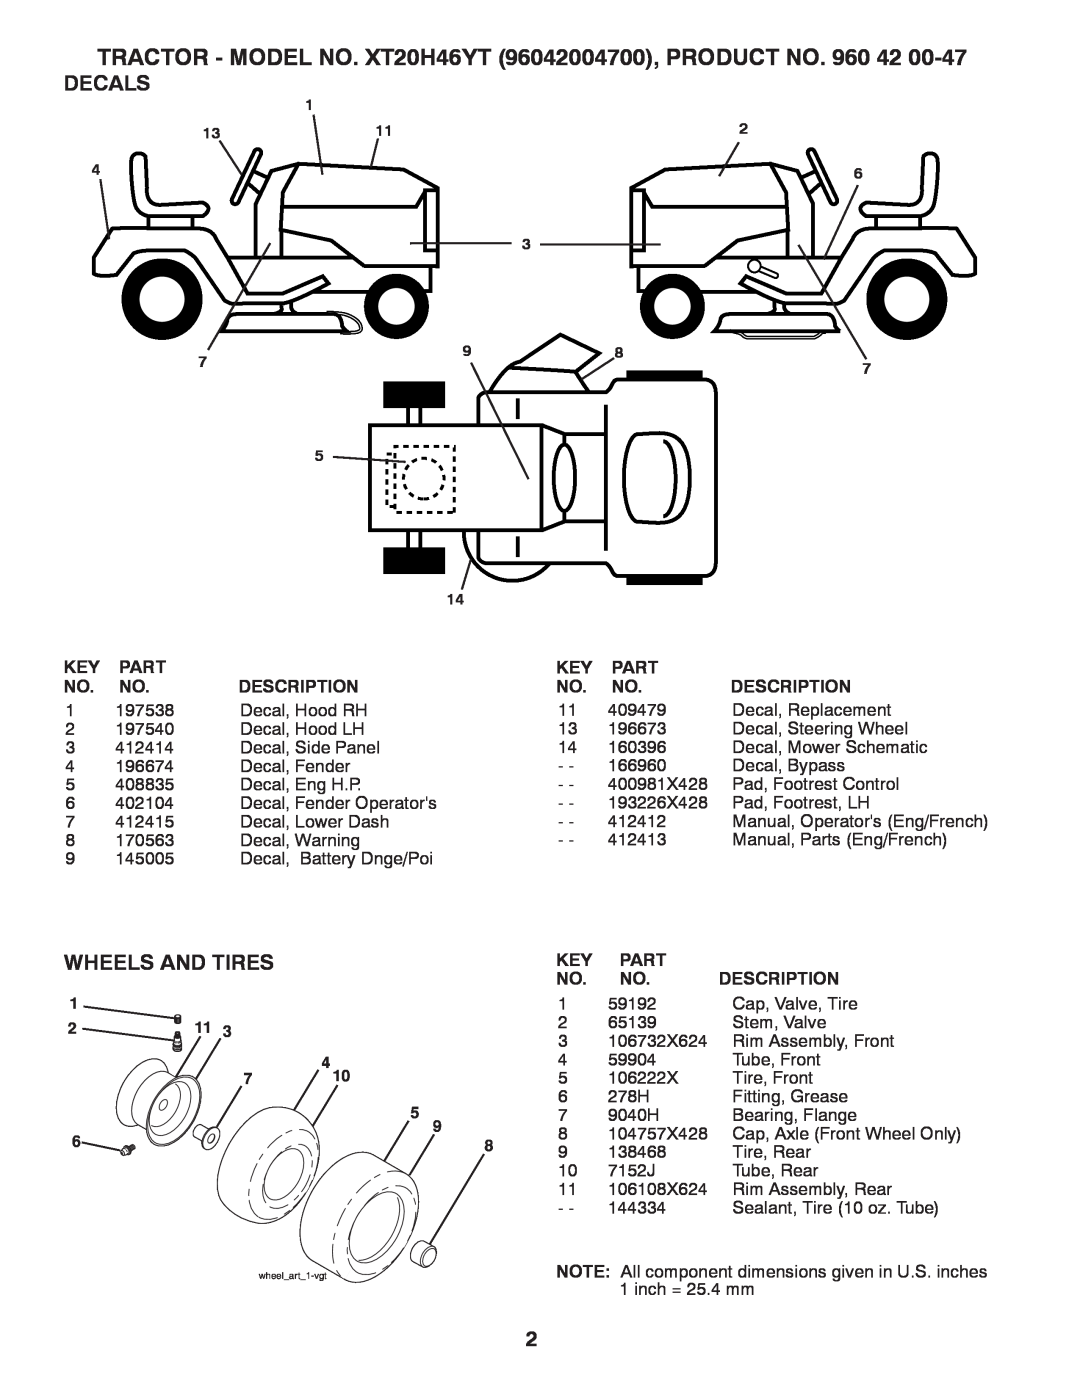 Poulan 412413 TRACTOR - MODEL NO. XT20H46YT 96042004700, PRODUCT NO. 960, Decals, Wheels And Tires, Part, Description 